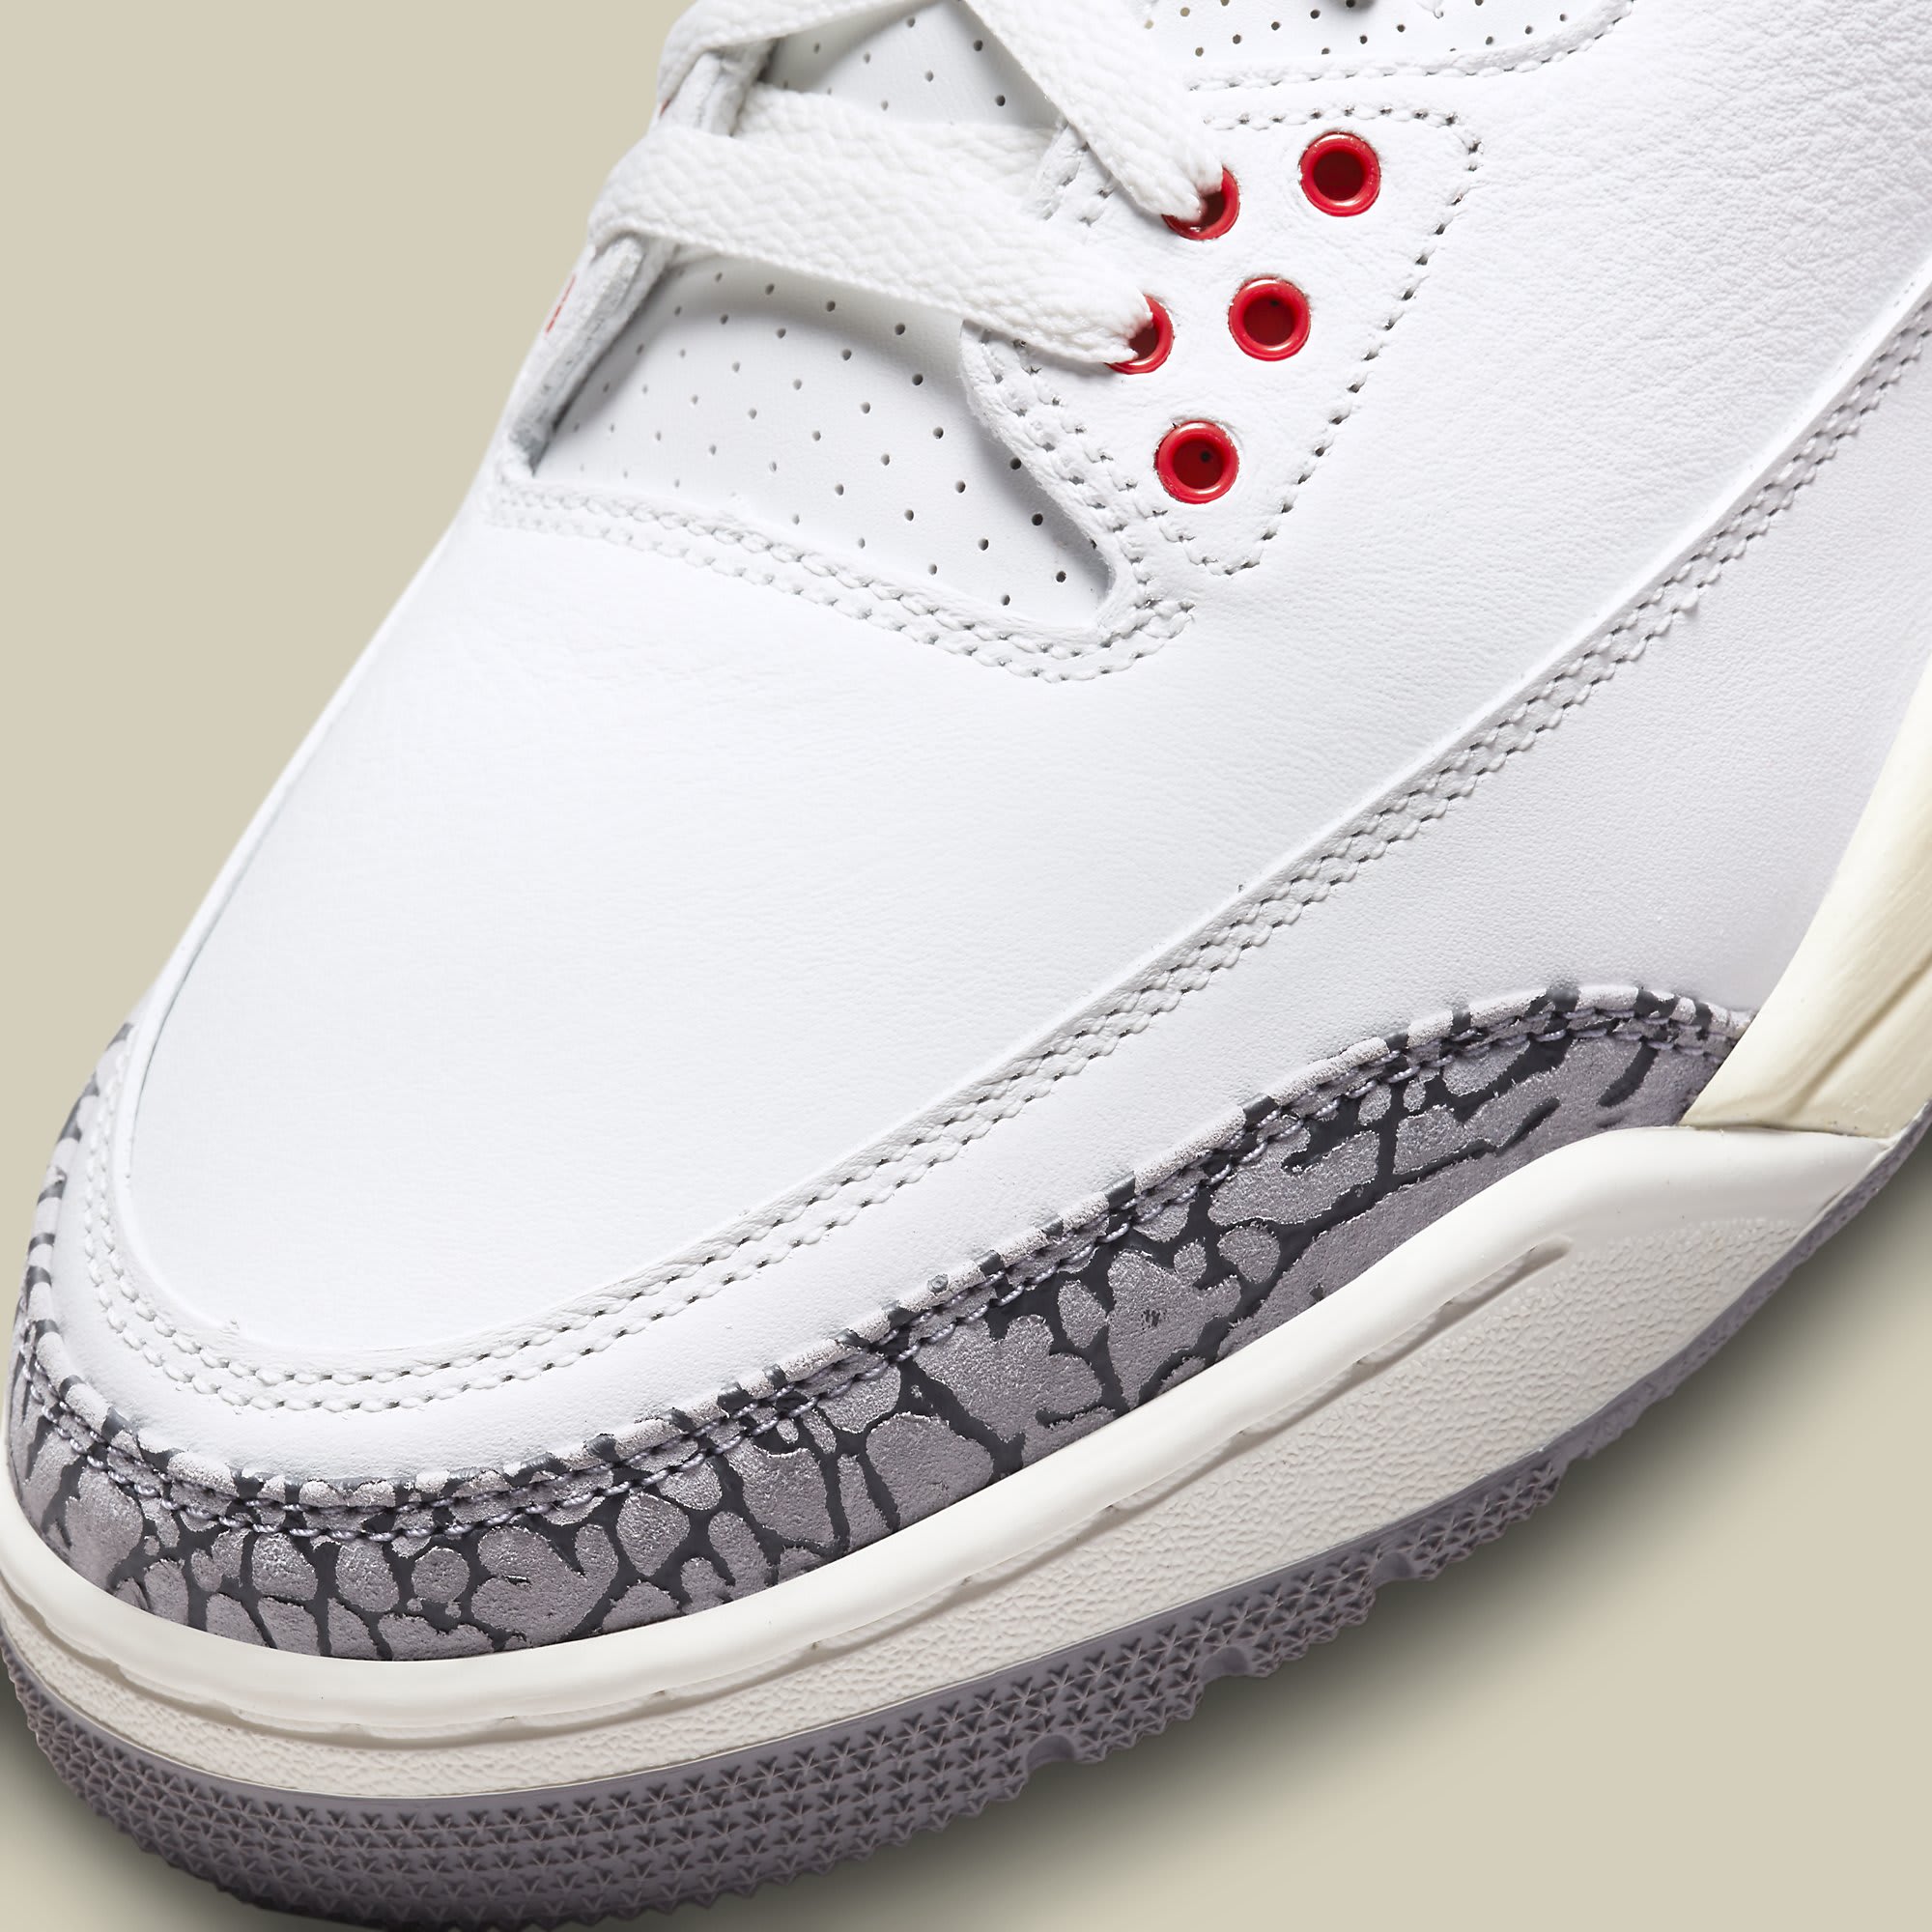 Air Jordan 3 'White/Cement' Remastered DN3707-100 (Toe Detail)